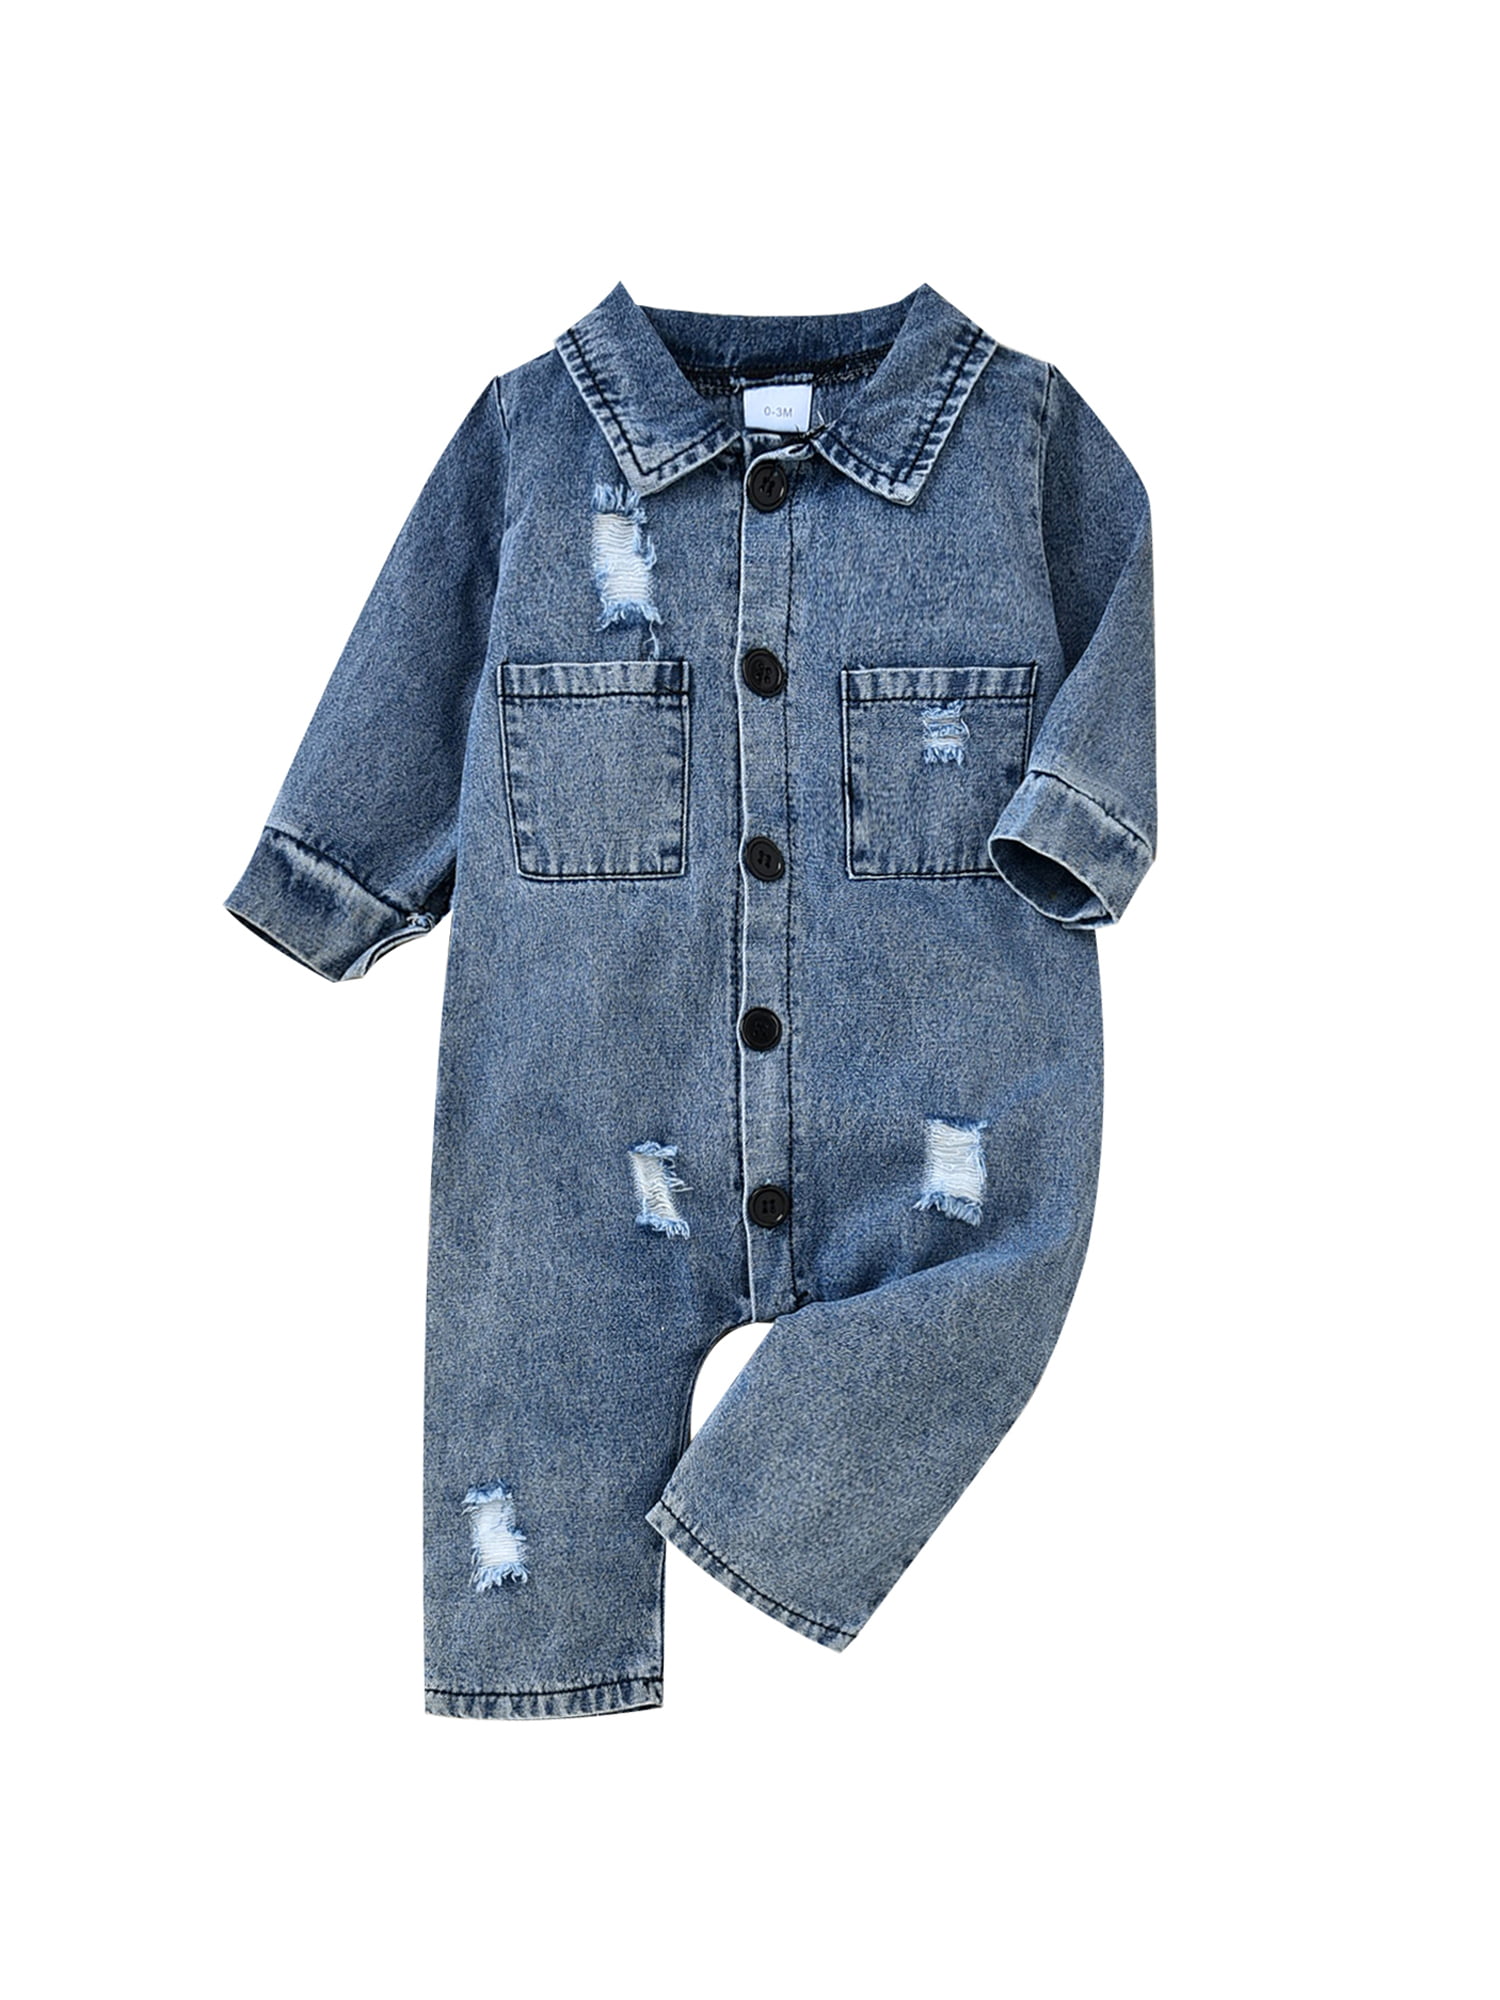 Toddler Newborn Boys Girls Denim Romper Jumpsuit Long Sleeve Solid Color Denim Chest Pocket Jeans Romper Bodysuit 